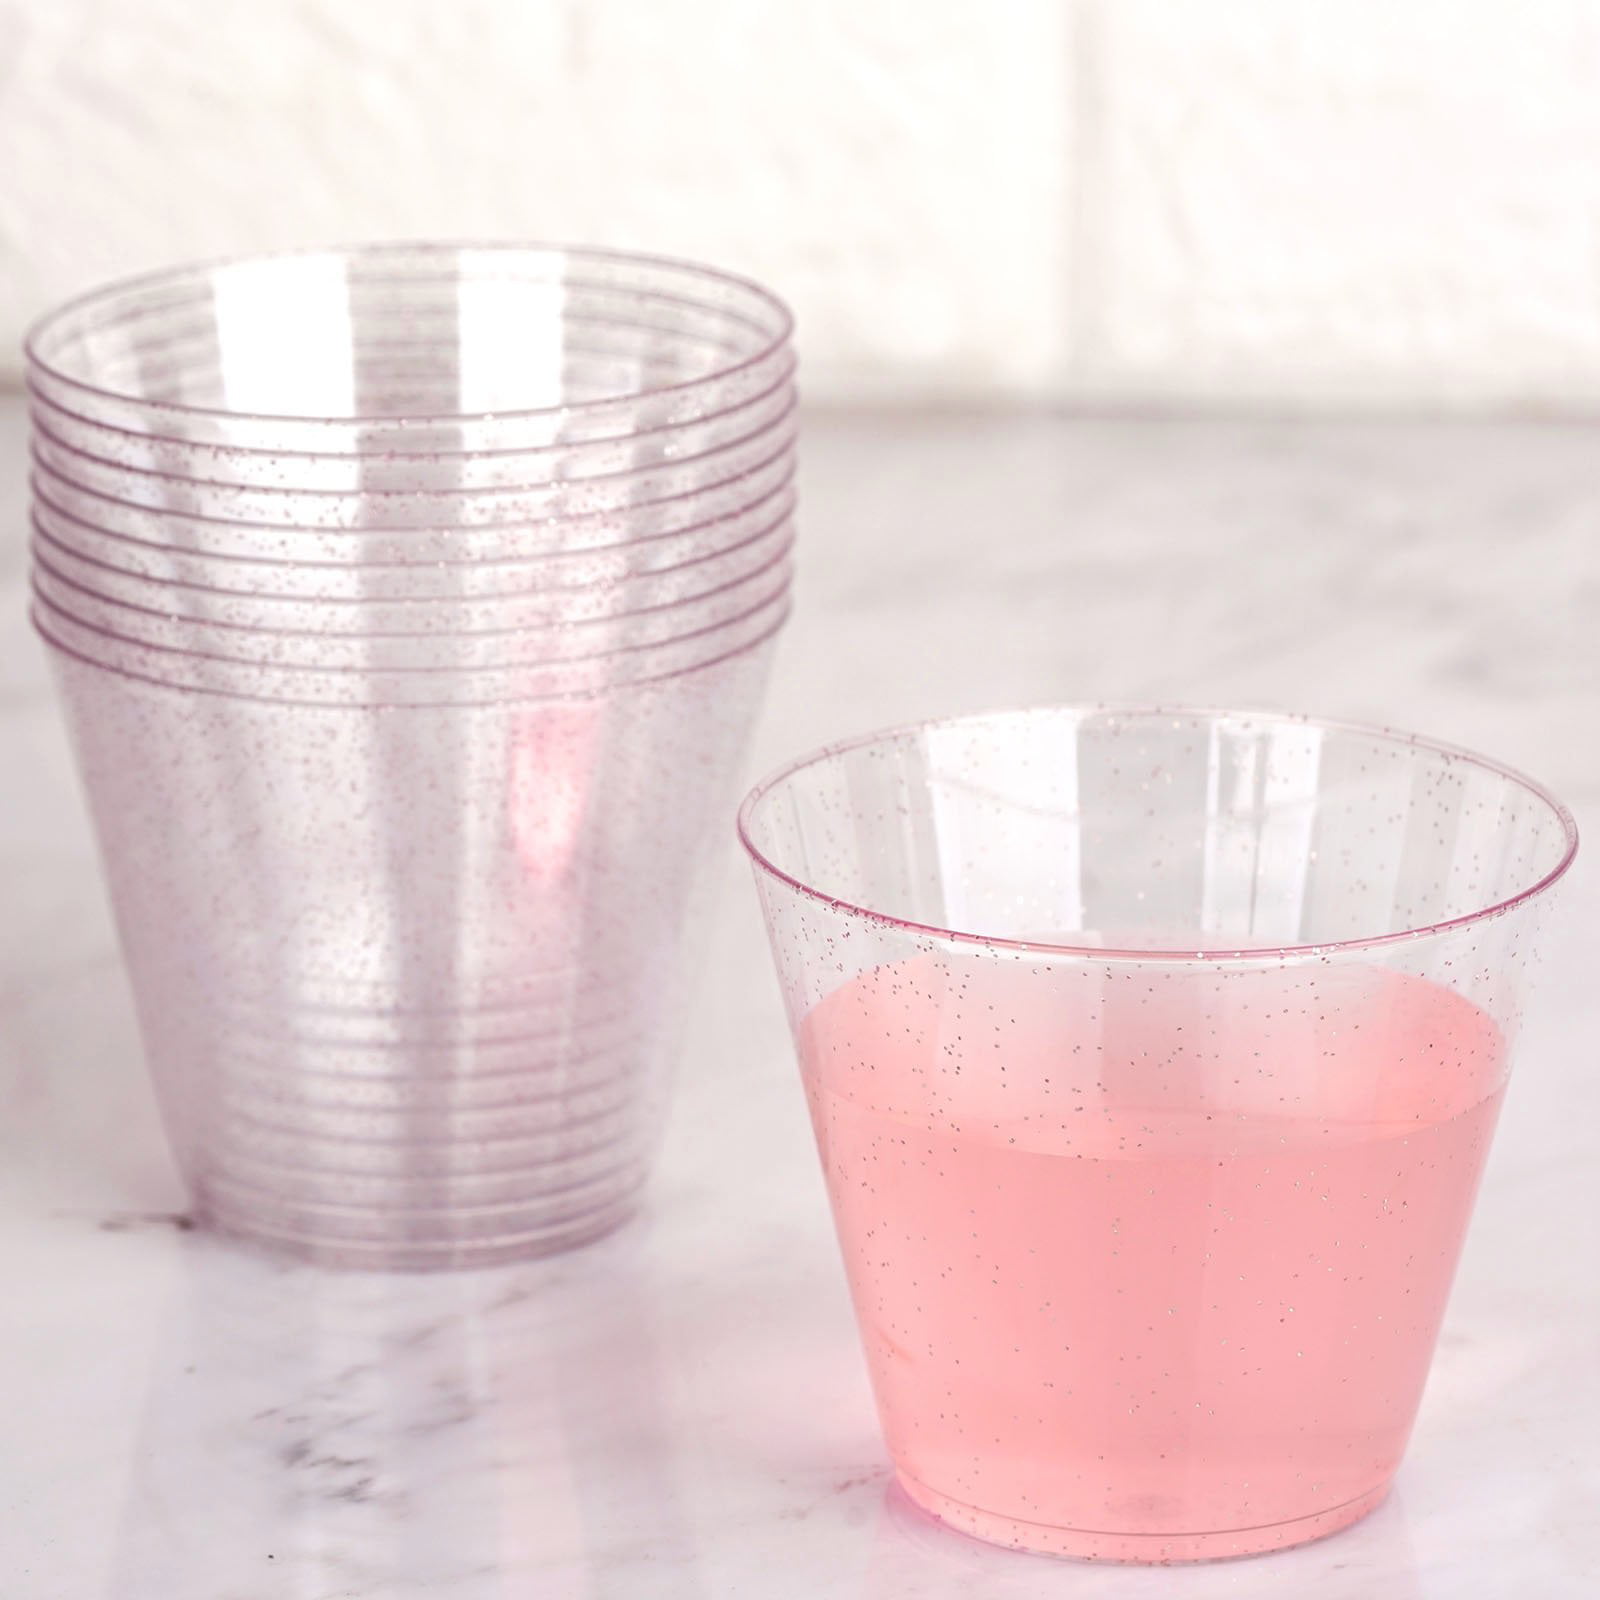 1000 LOTUS DISPOSABLE DESSERT CUPS PLASTIC SHOT GLASS FOR APPETIZERS/DESSERTS 